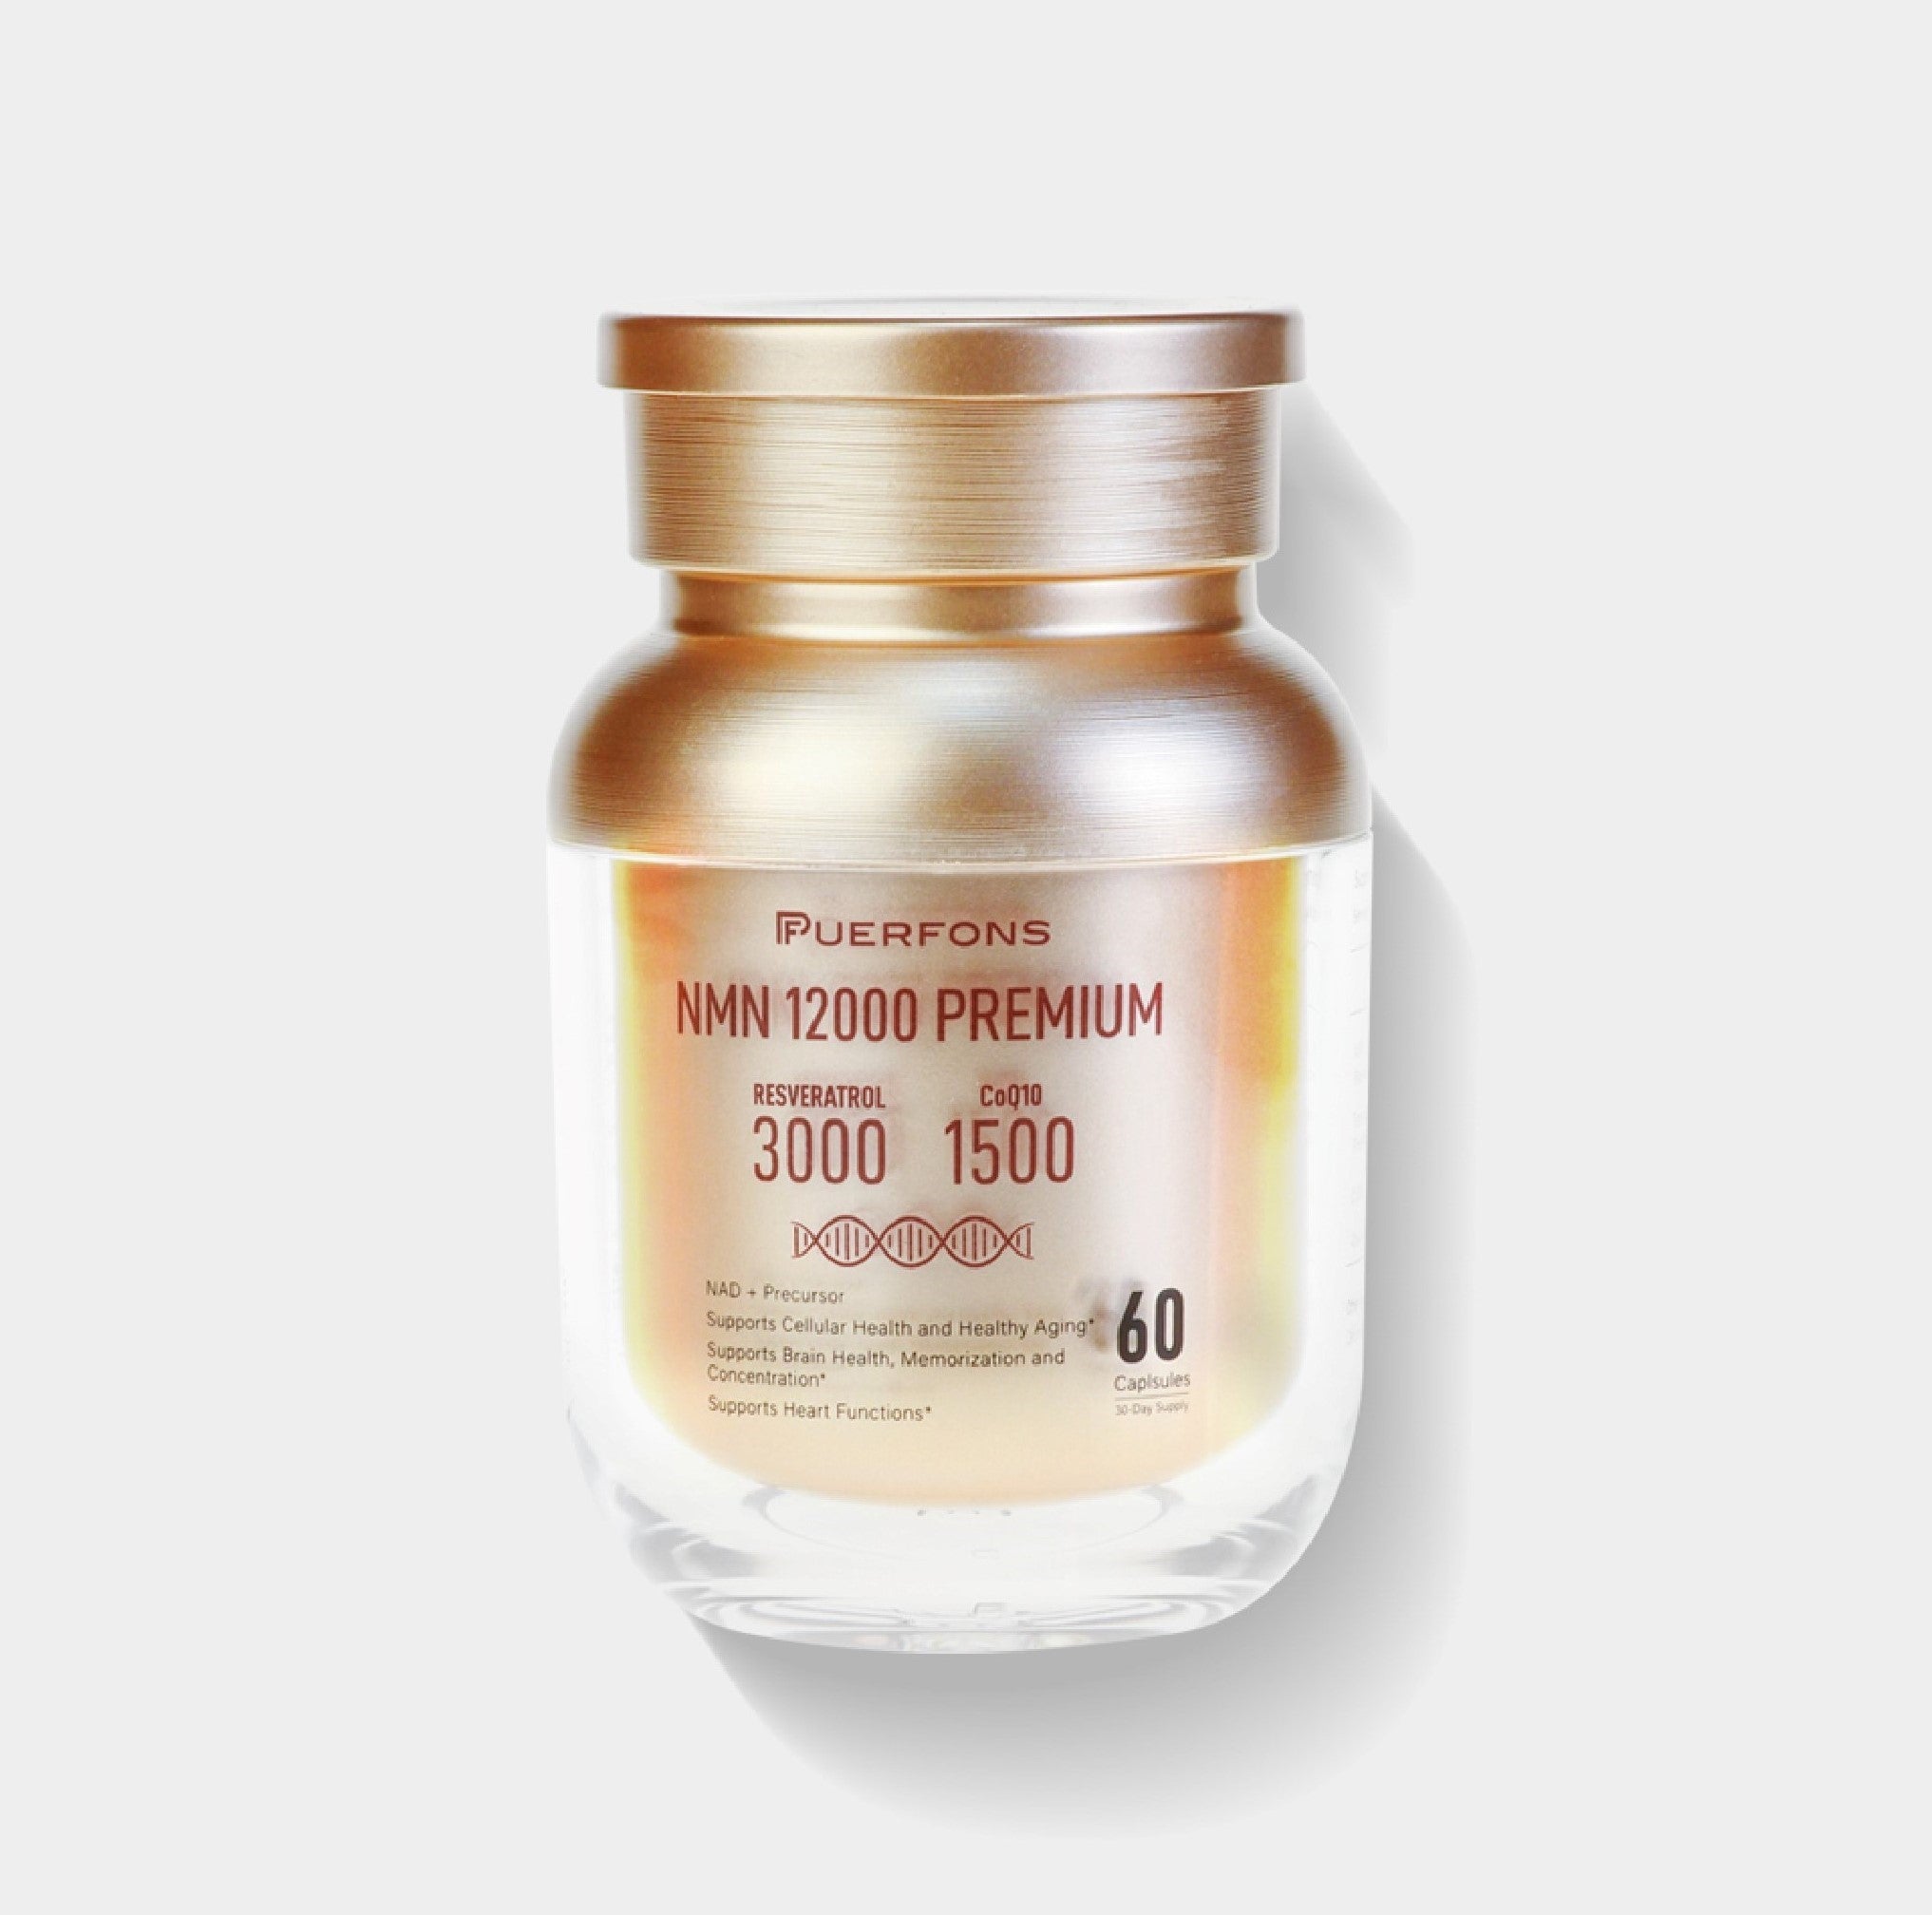 01c.) Puerfons NMN12000 Preimum 抗衰老膠囊(金鑽版) – Shop the Lisse